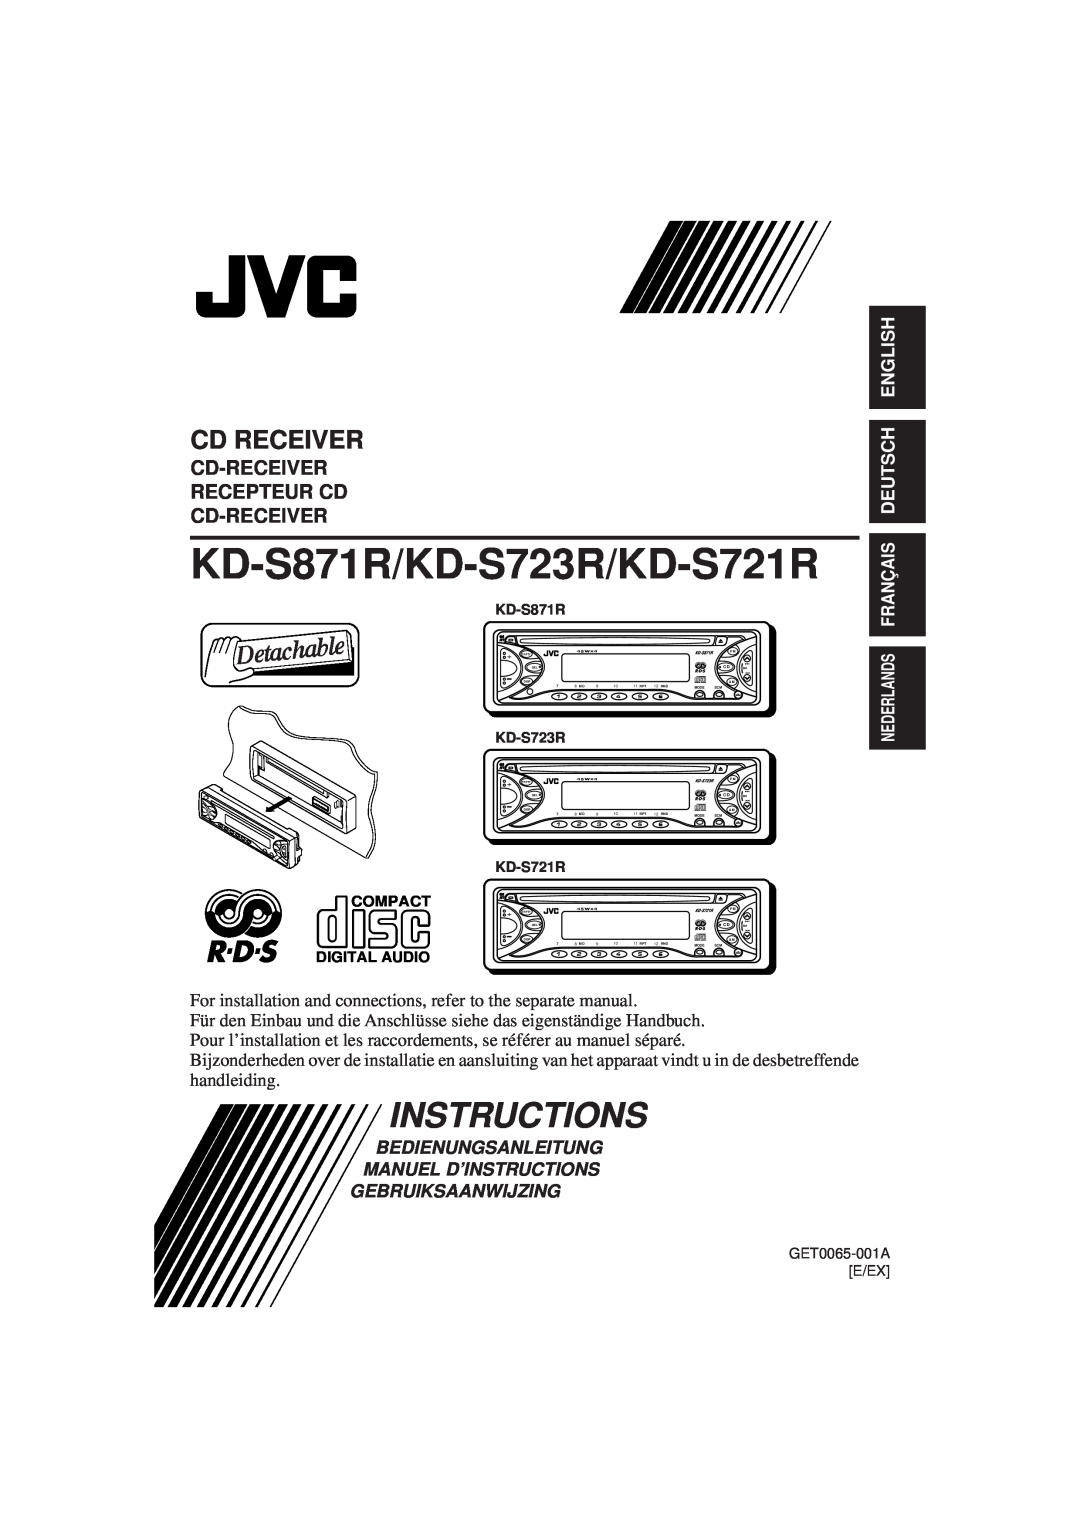 JVC KD-S721R manual Cd Receiver, Cd-Receiver Recepteur Cd Cd-Receiver, Nederlands Français Deutsch English, Instructions 